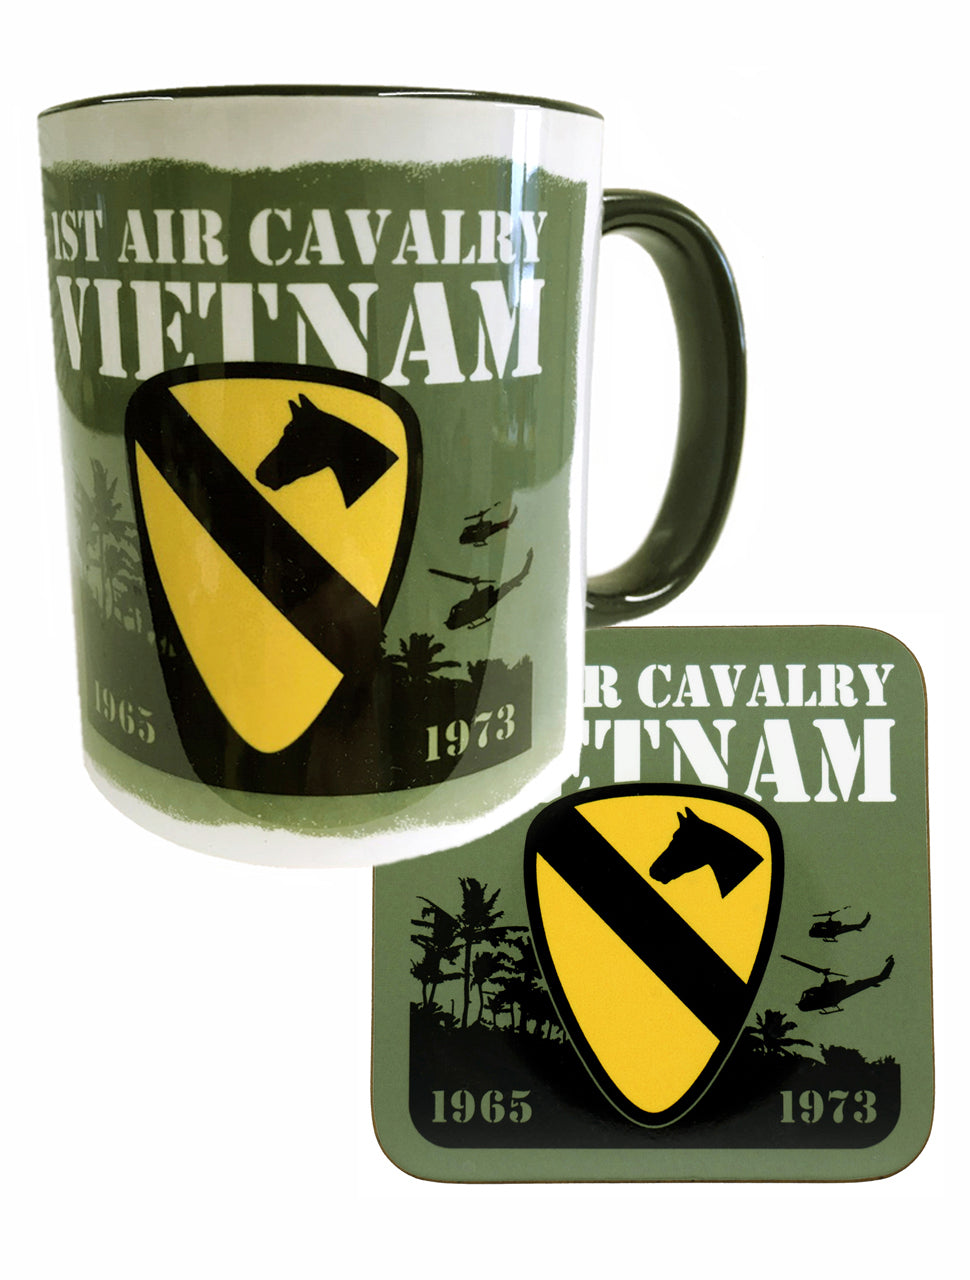 1st Air Cavalry Division US Army Vietnam Mug Coaster